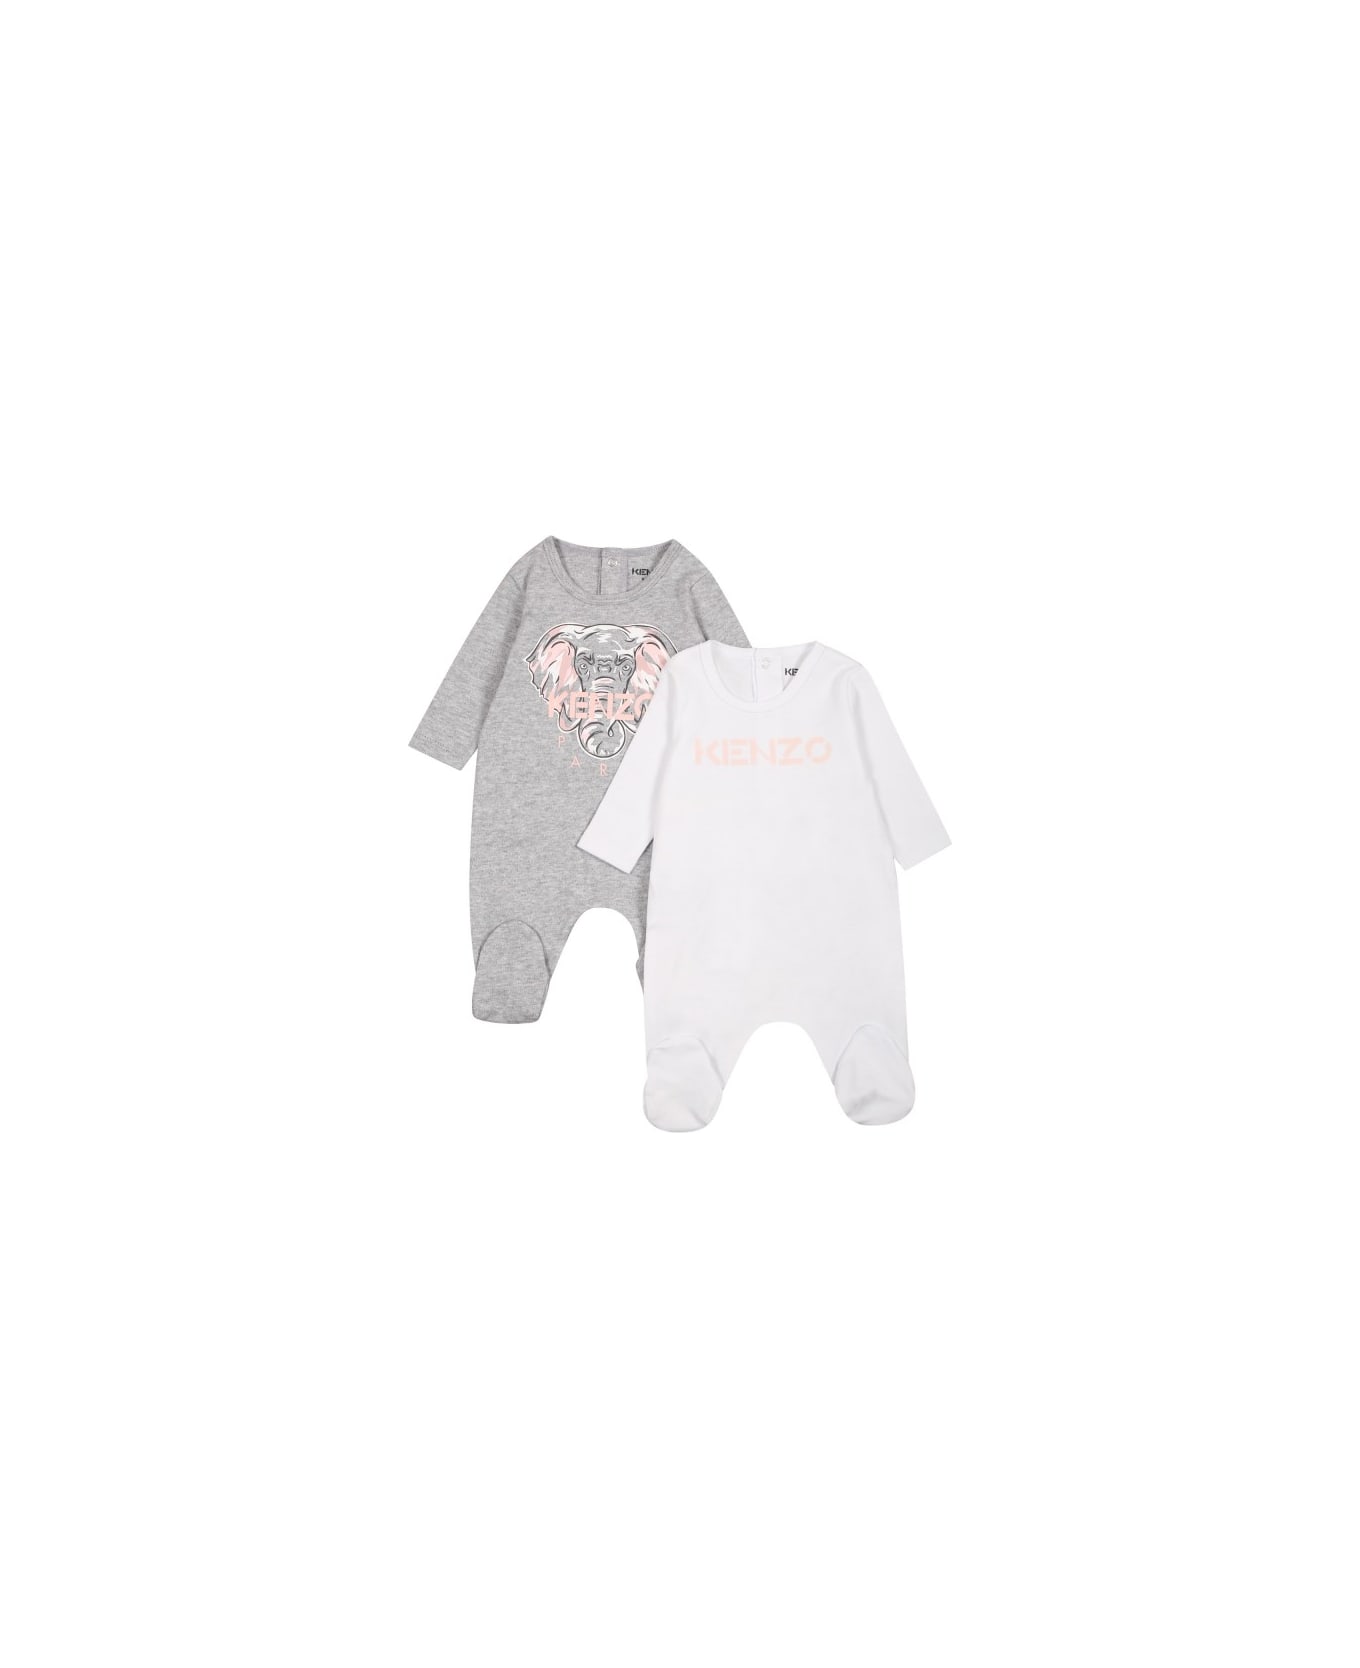 Kenzo Kids 2-piece Newborn Set - Gray